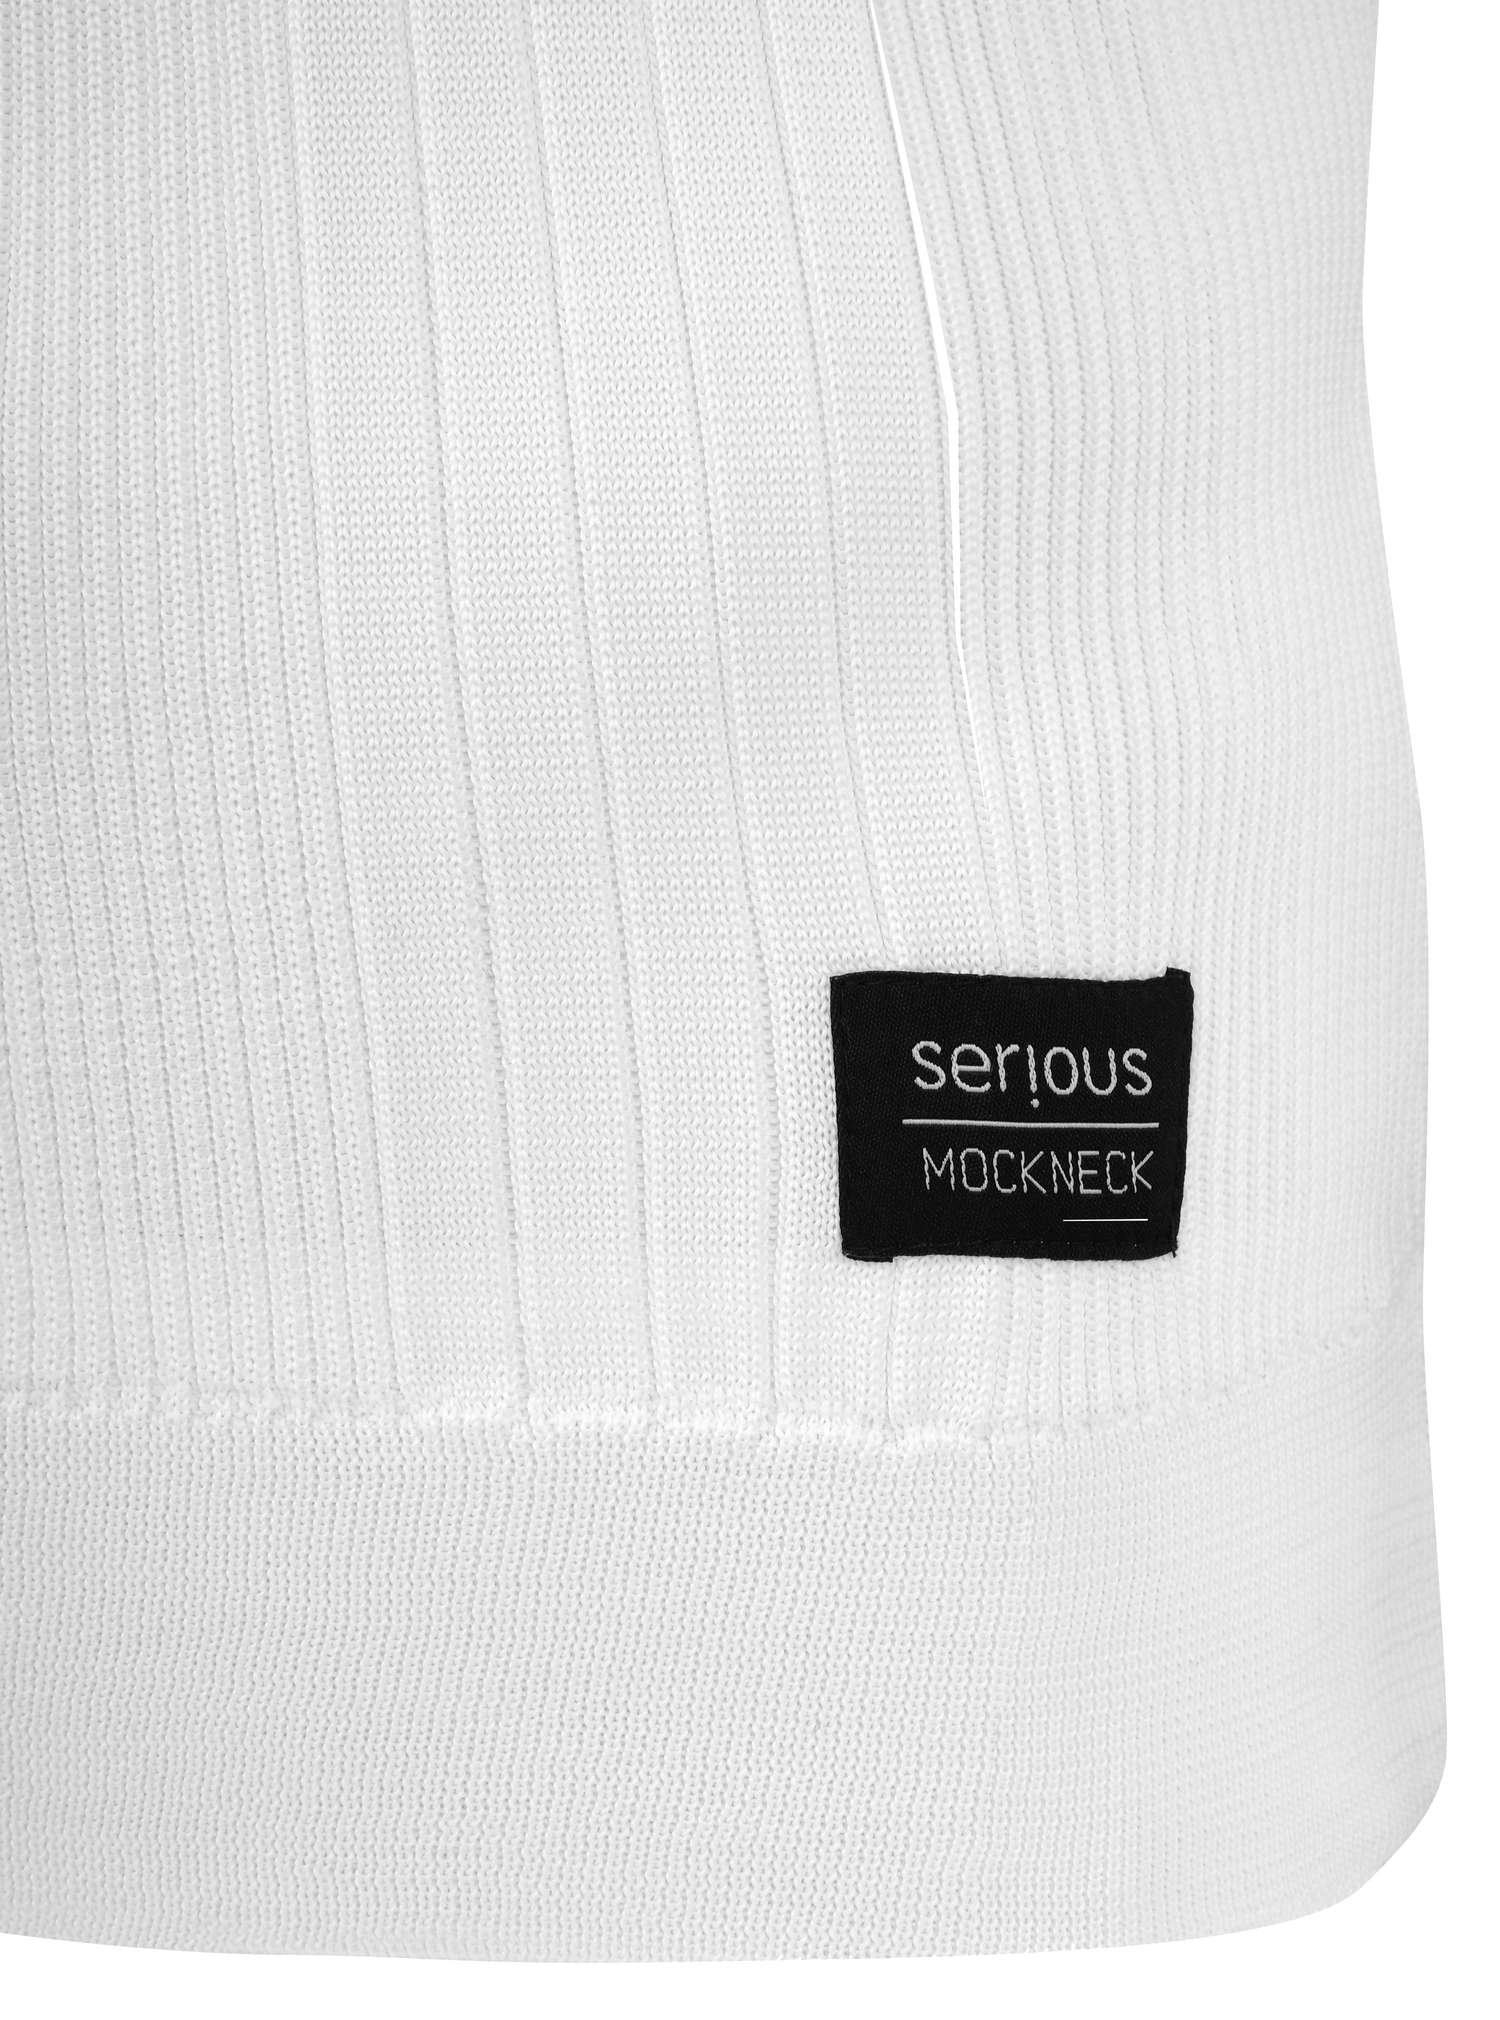 Serious B-Boy Gear - Original Premium Mockneck - Weiß